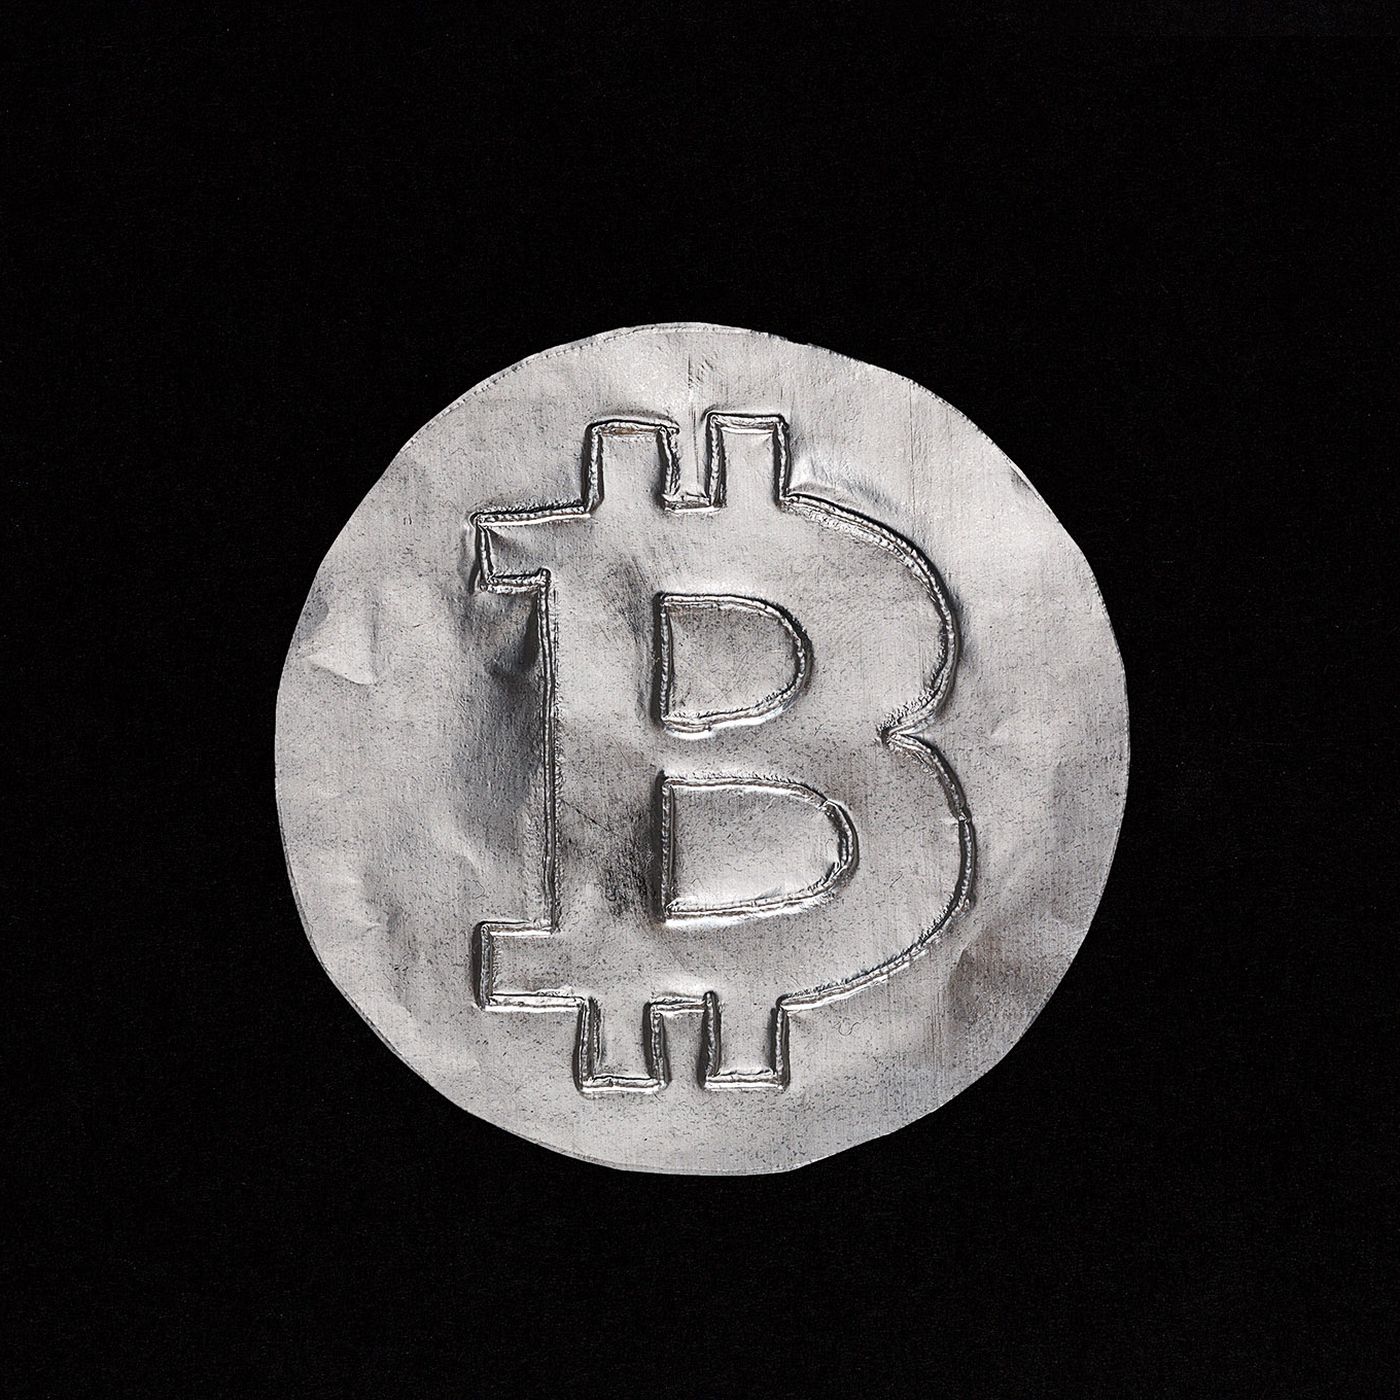 divieti di plattsburgh bitcoin mineraria